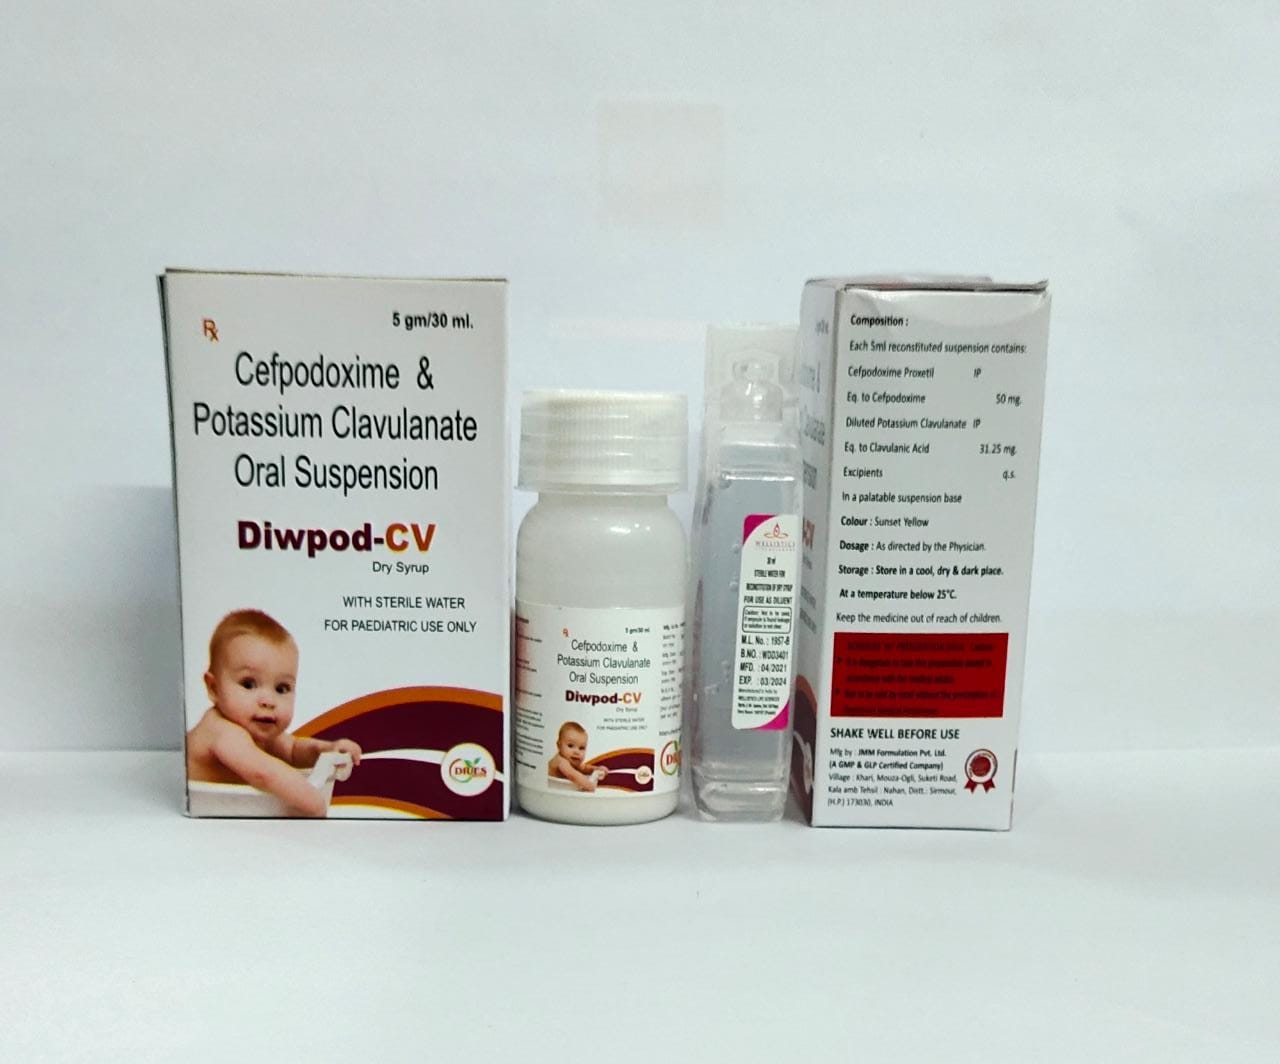 DIWPOD-CV Dry Syrup